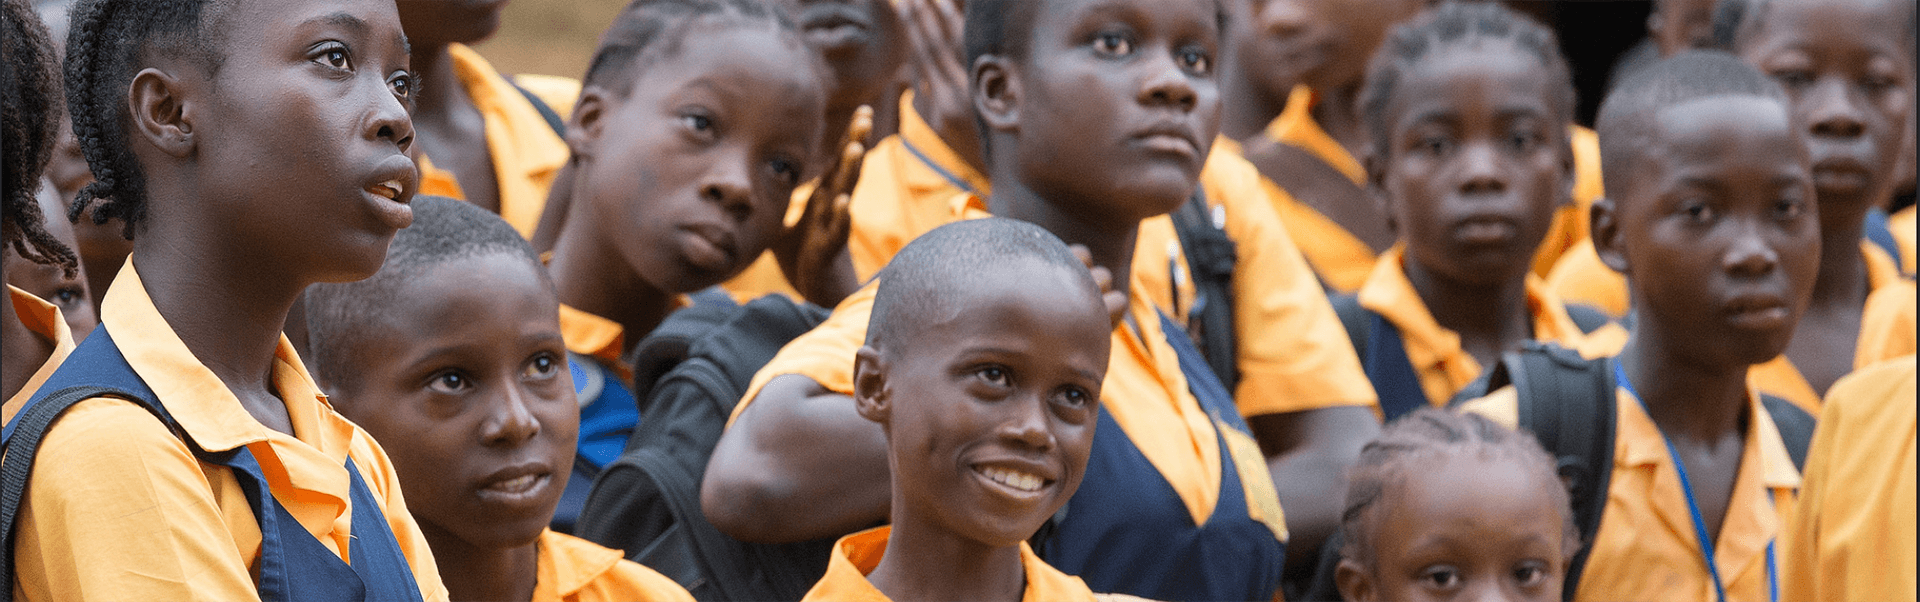 Liberian children